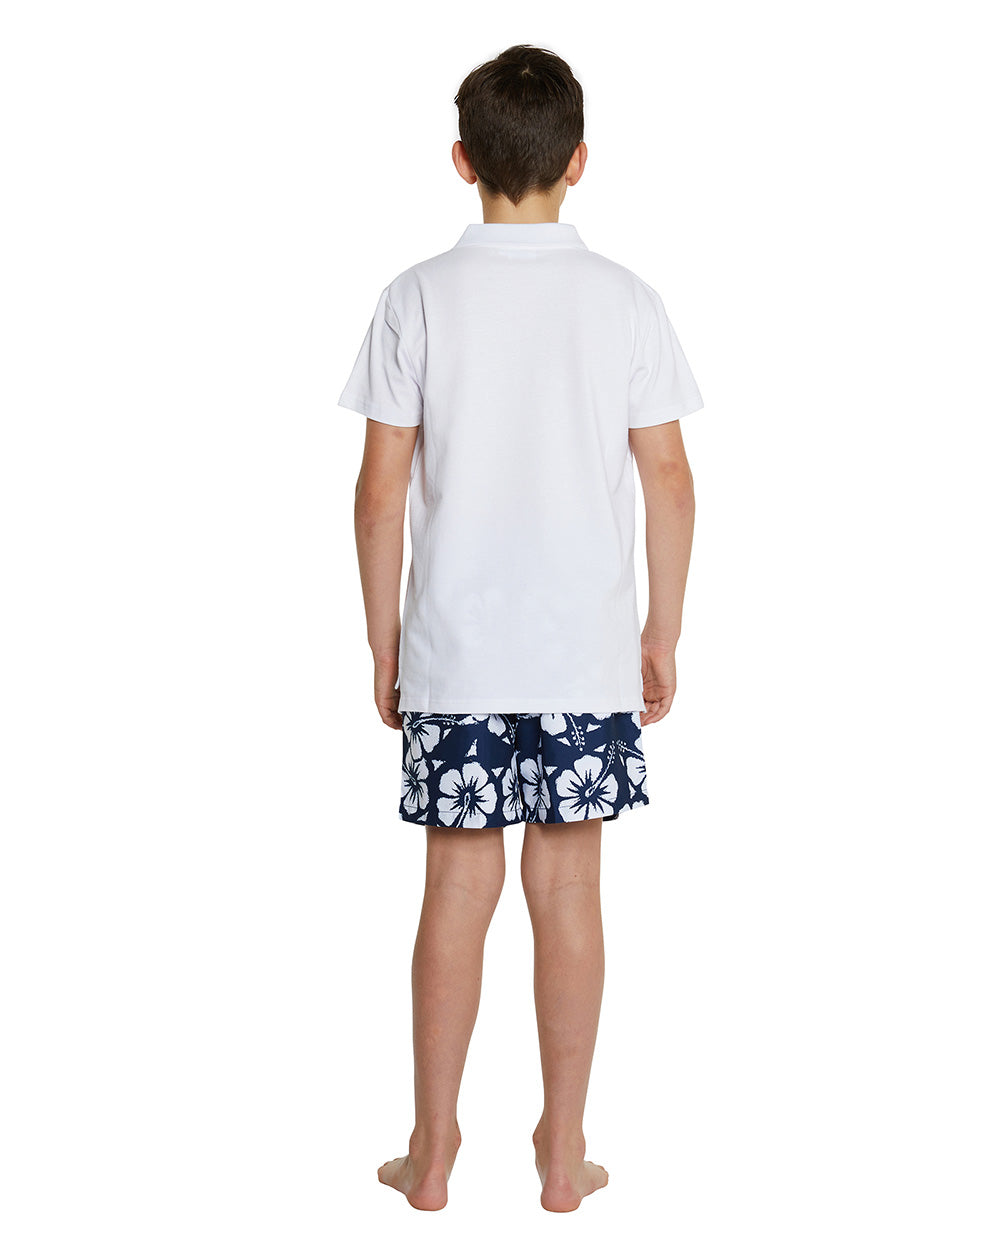 Boys - Classic Polo Shirt - White